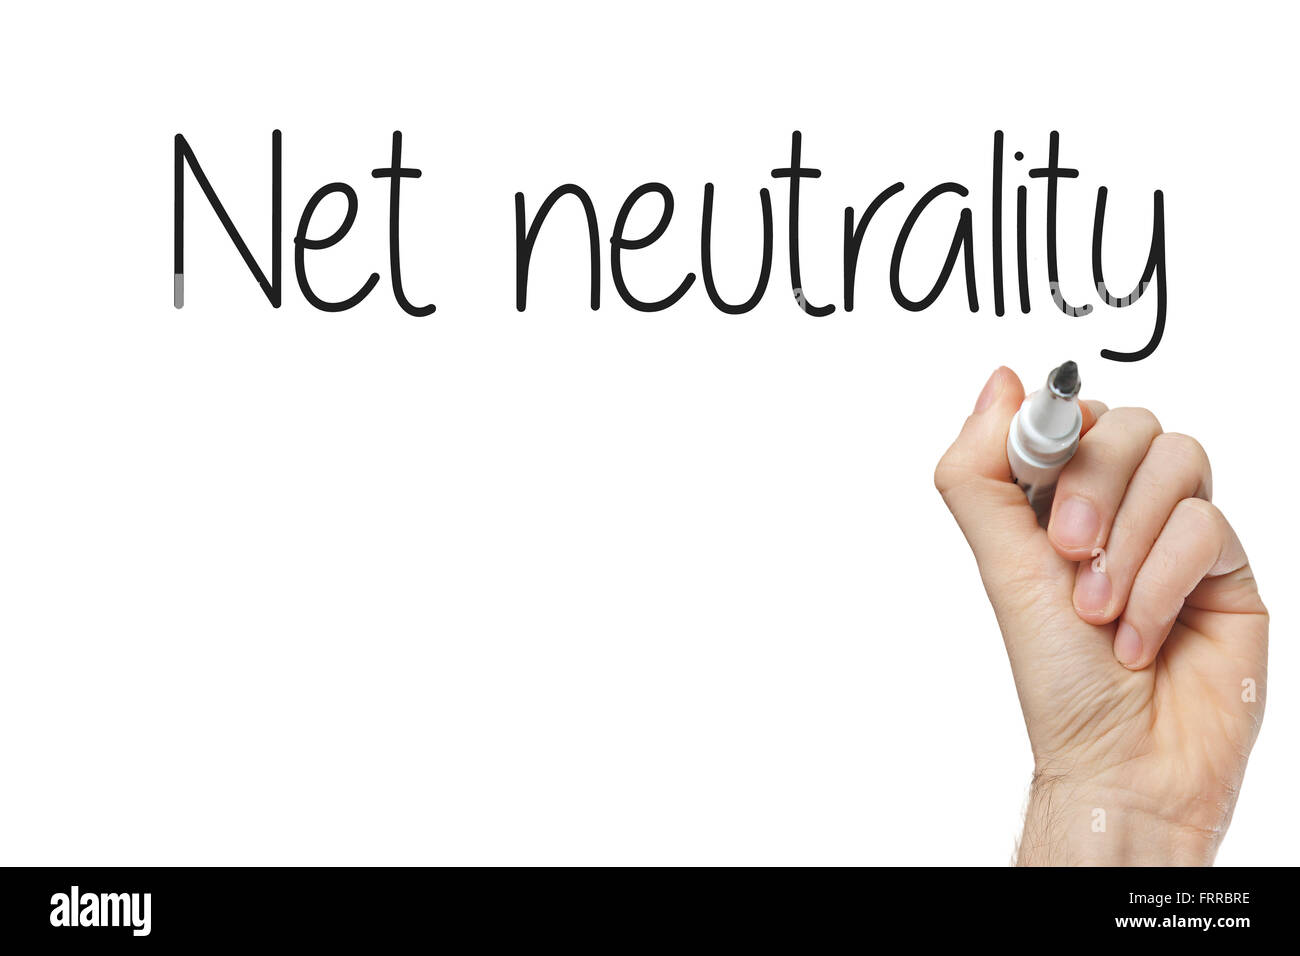 Hand writing net neutrality on a white board Stock Photo